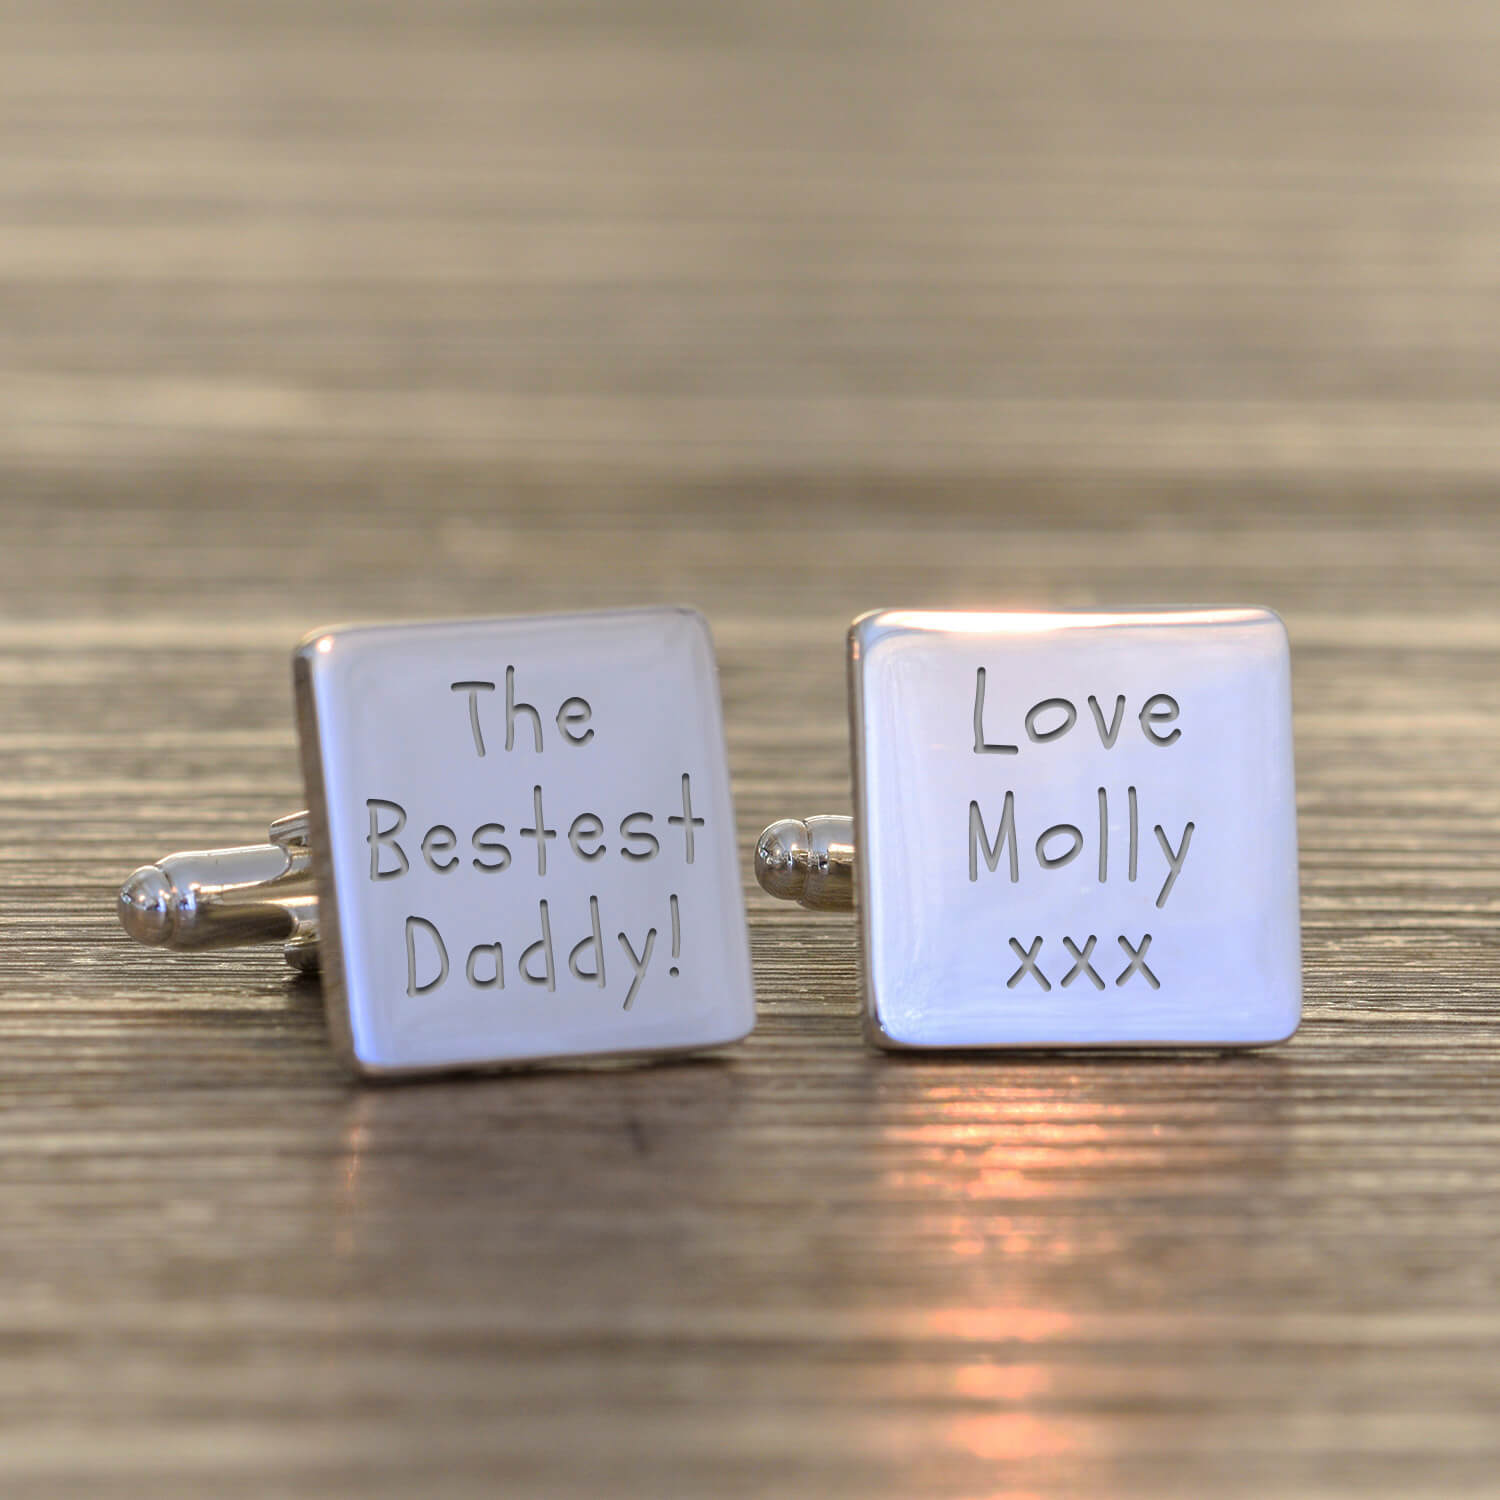 Personalised Cufflinks – The Bestest Daddy!